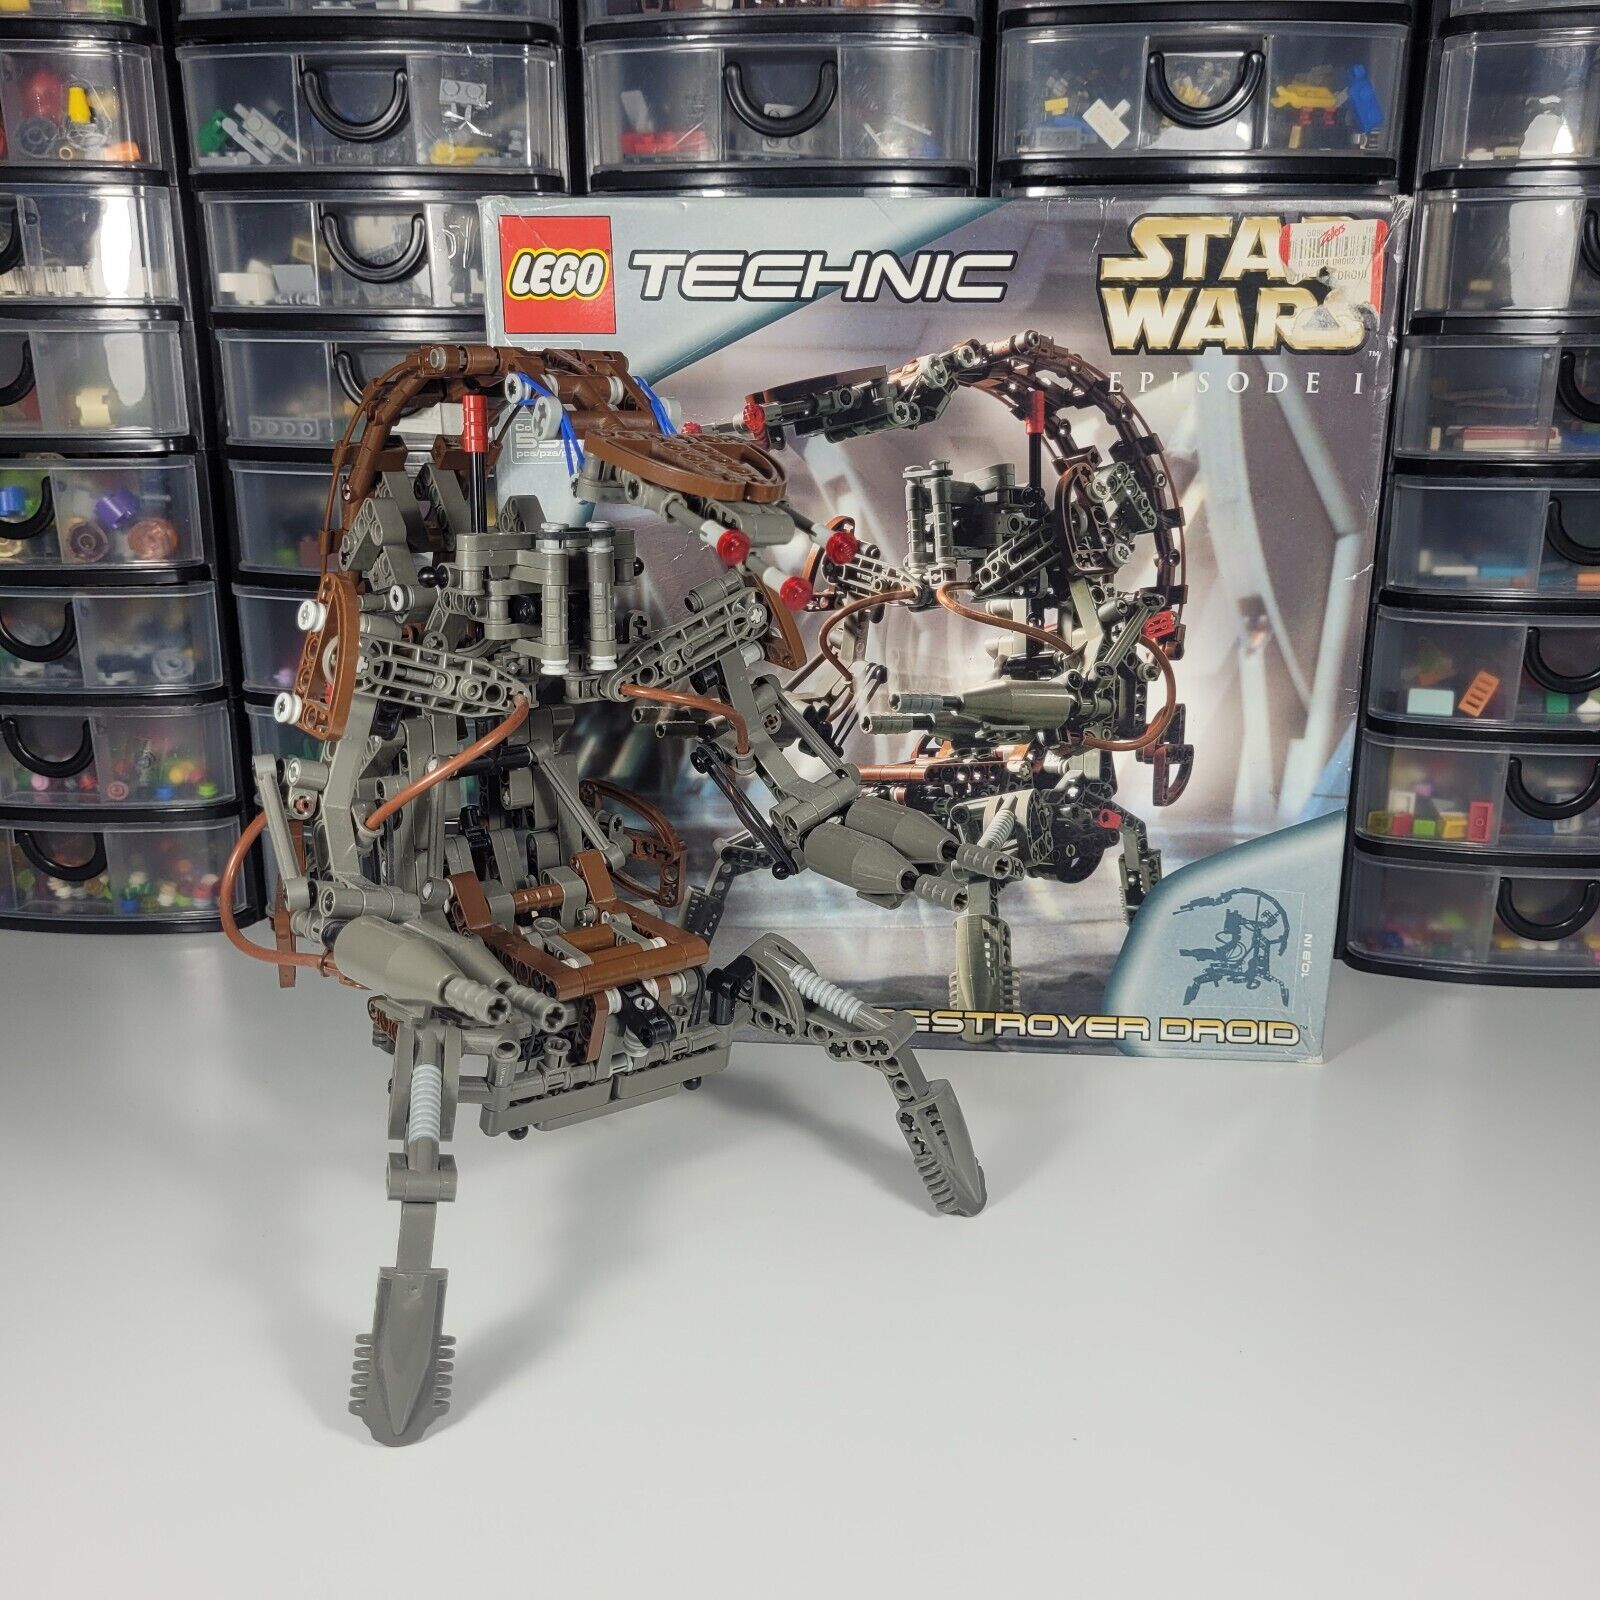 LEGO Star Wars: Destroyer Droid (8002)